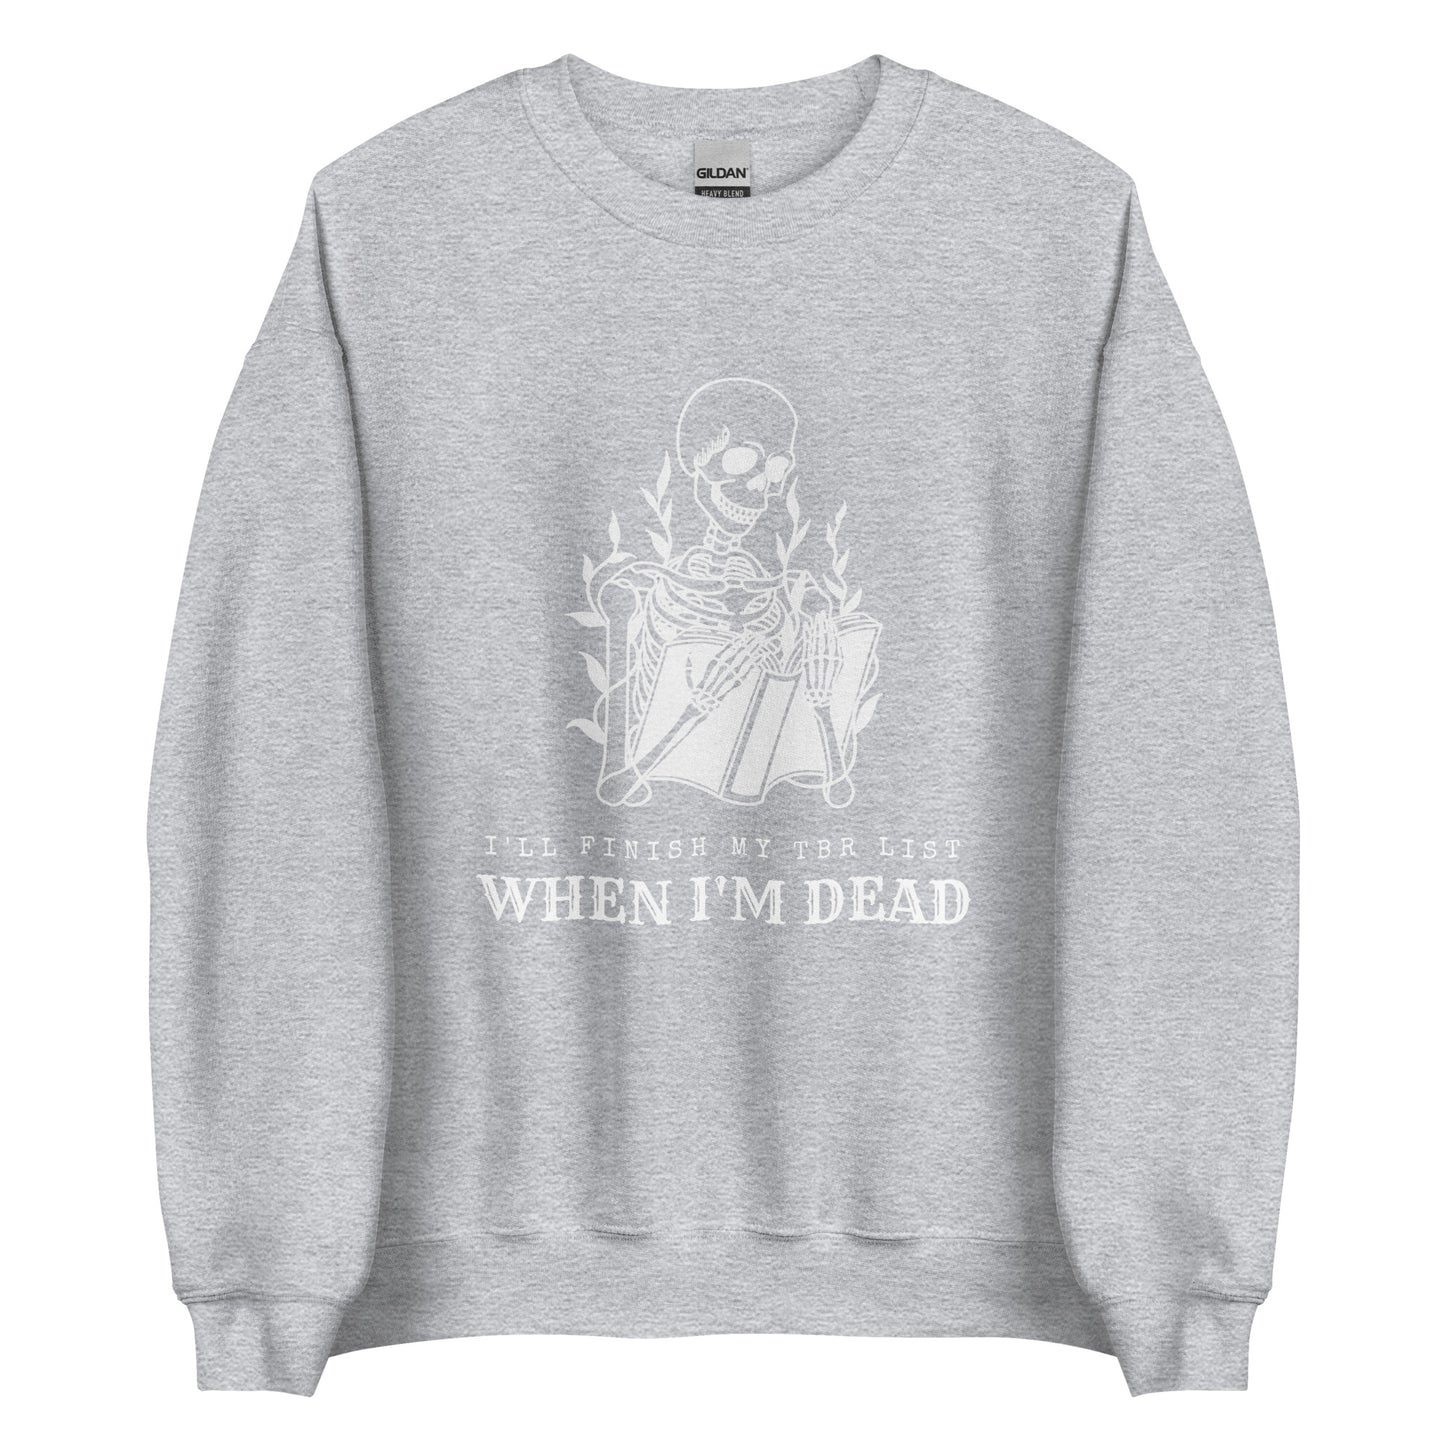 i'll finish my tbr list when i'm dead (in white) sweatshirt